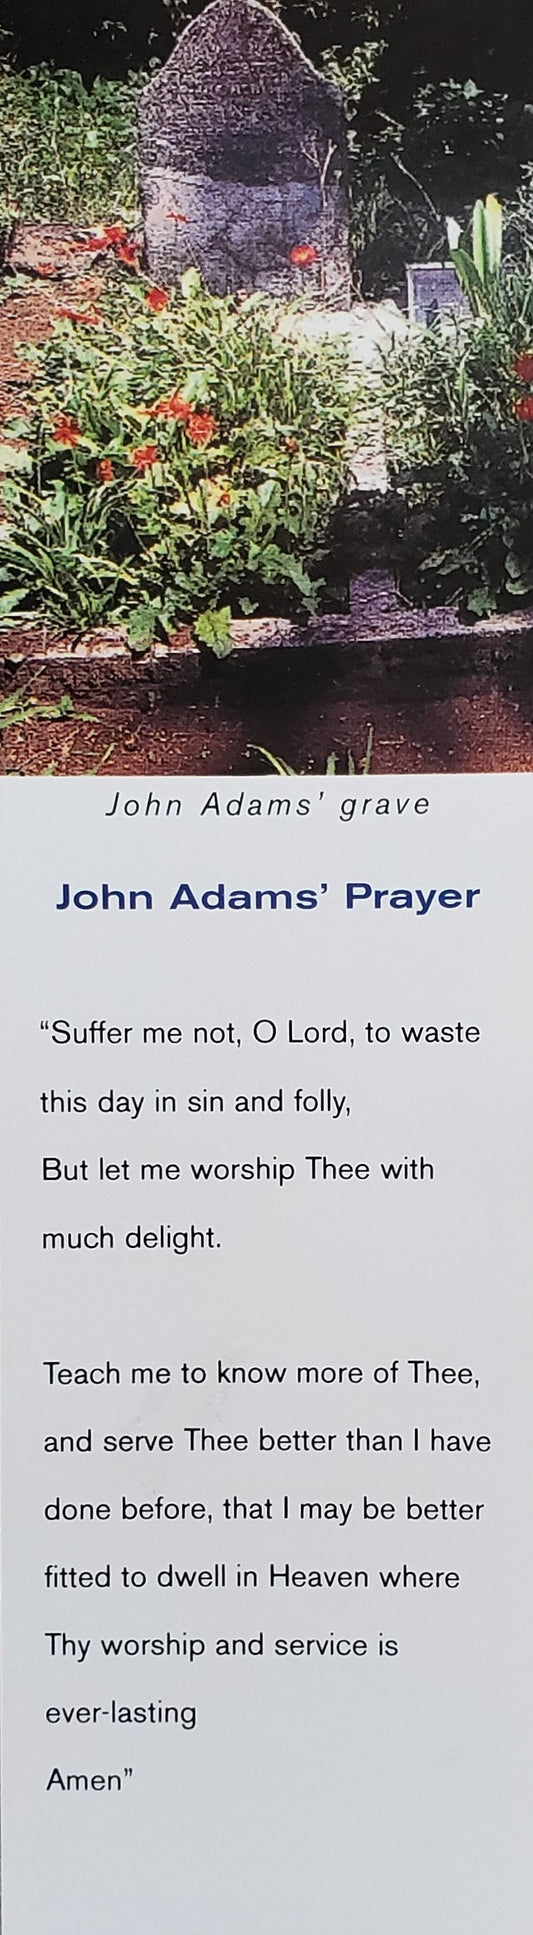 Signet - tombe de John Adams, papier cartonné